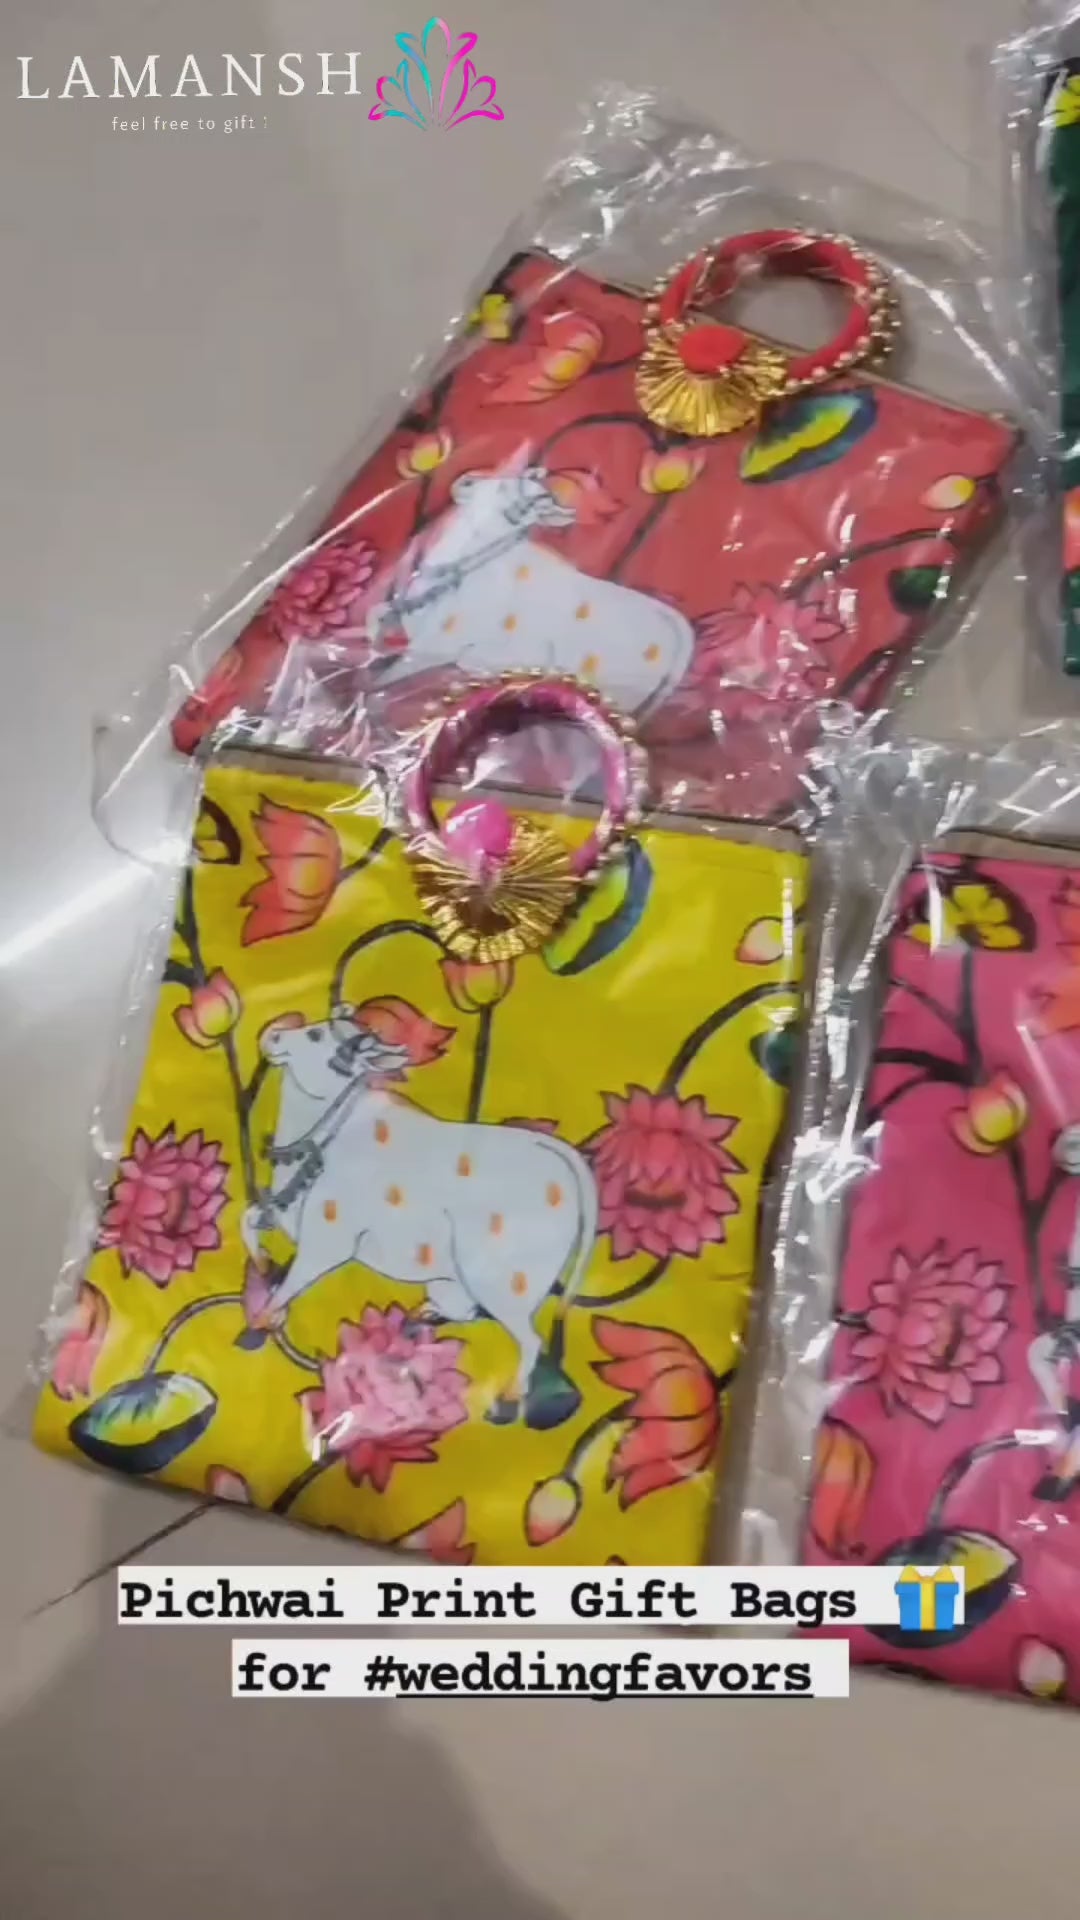 LAMANSH® Pichwai Print Return Gifts 🎁 bags with gota chudi handle | Floral Print Hand Bags for Return Gifting in Puja & Wedding